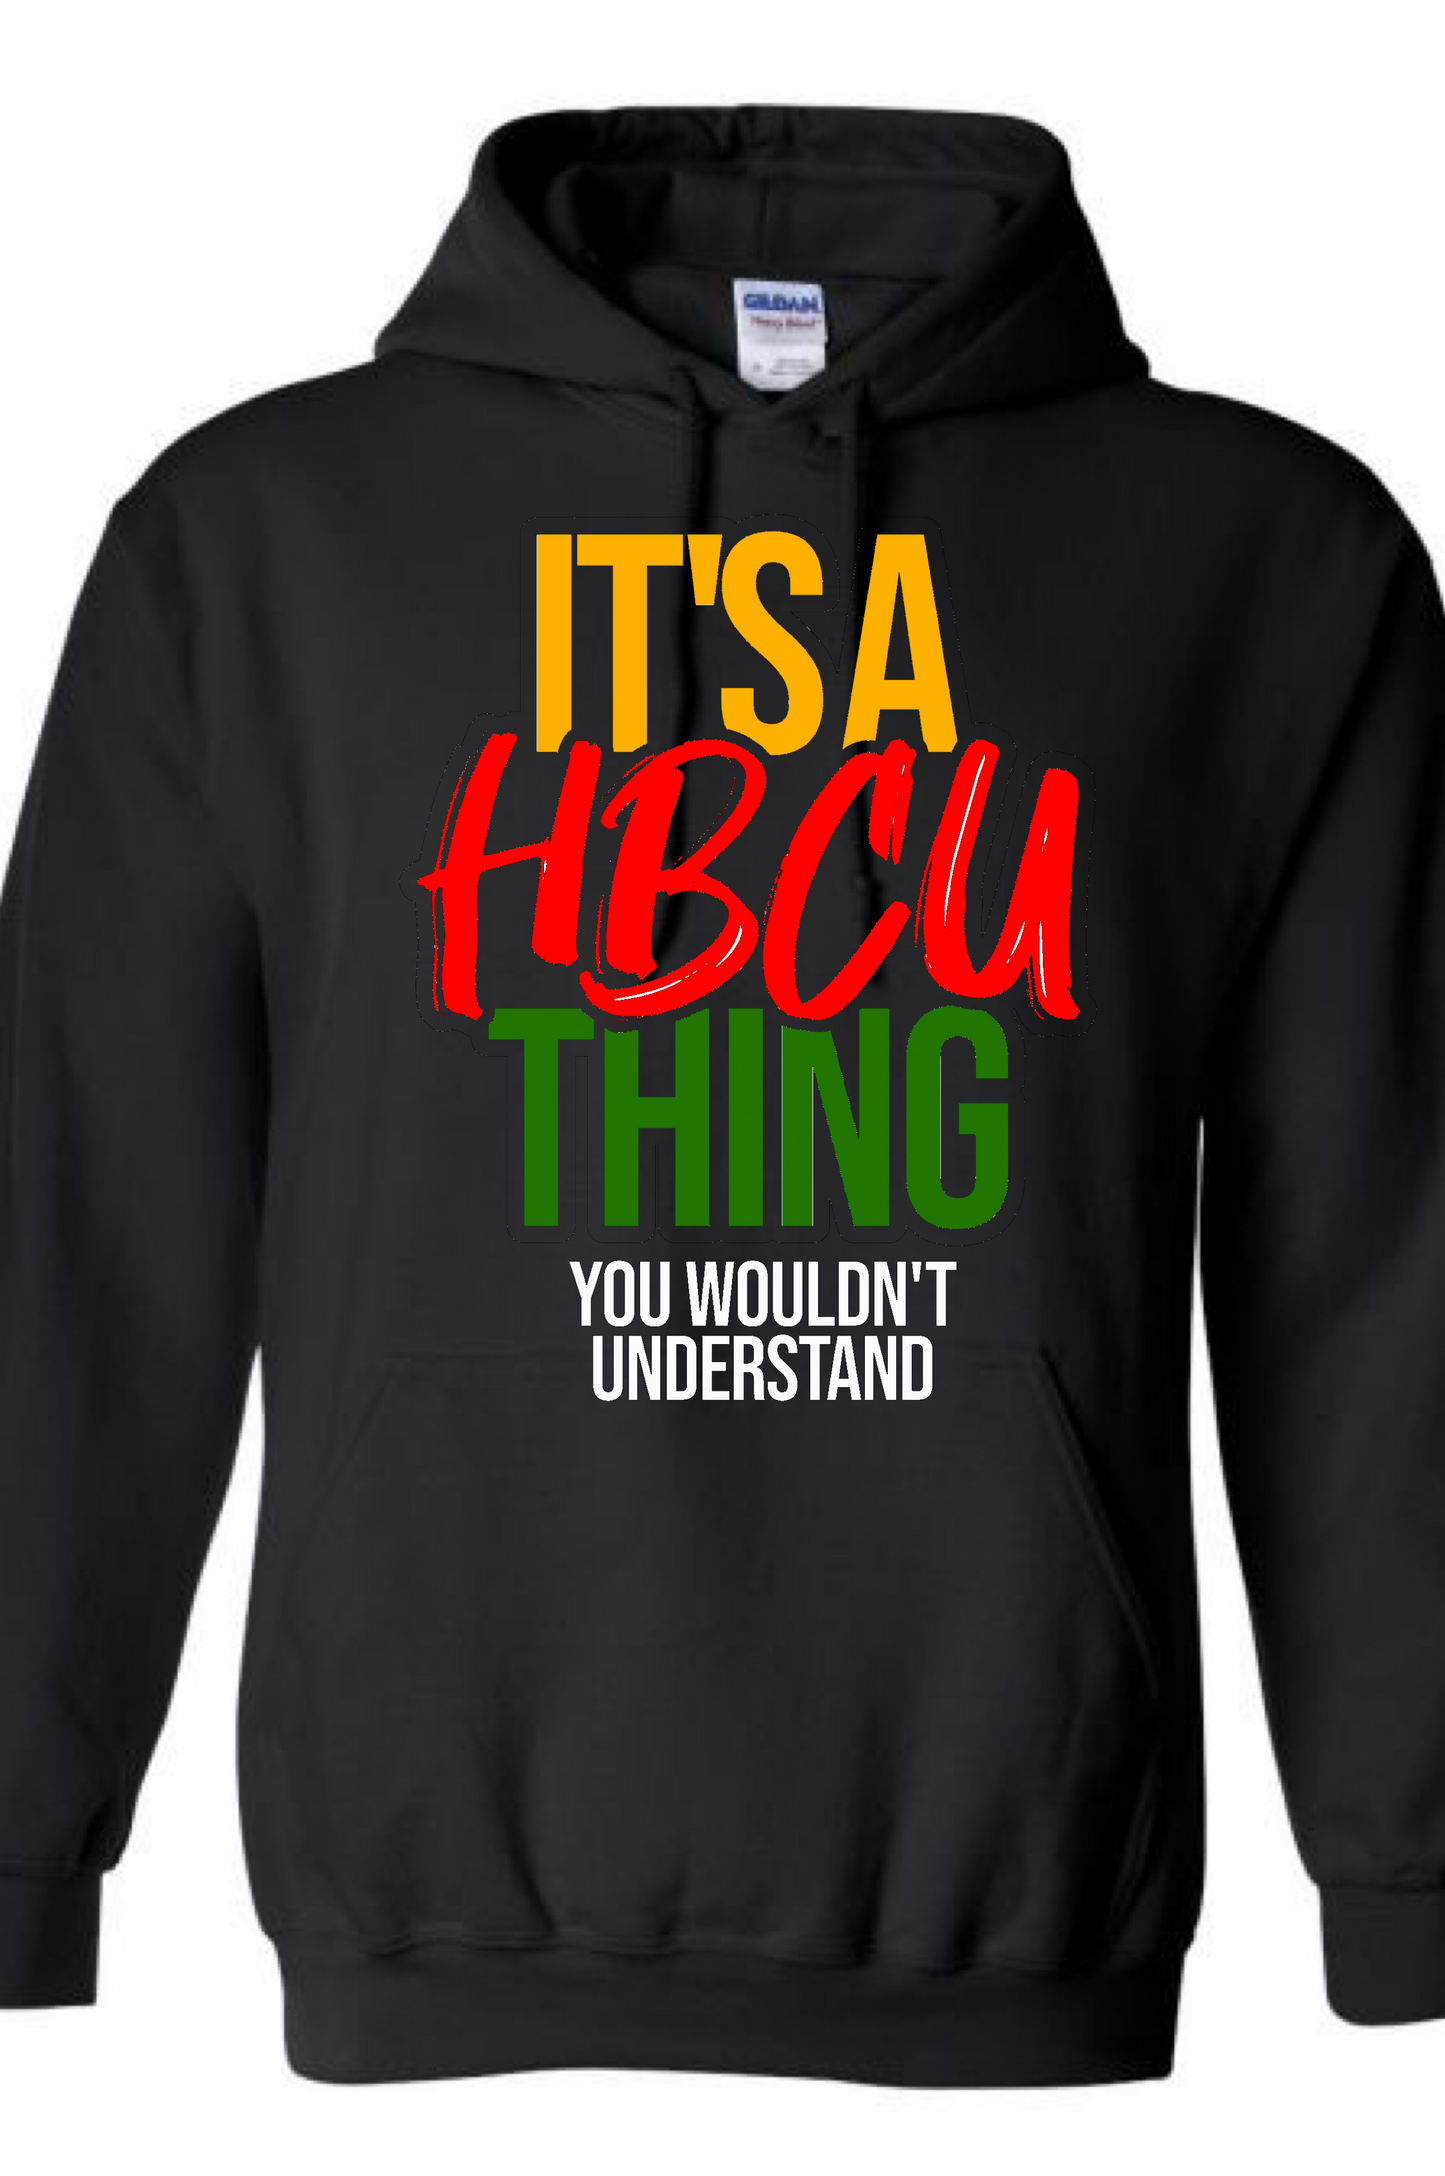 It's A HBCU Thing Hoodie